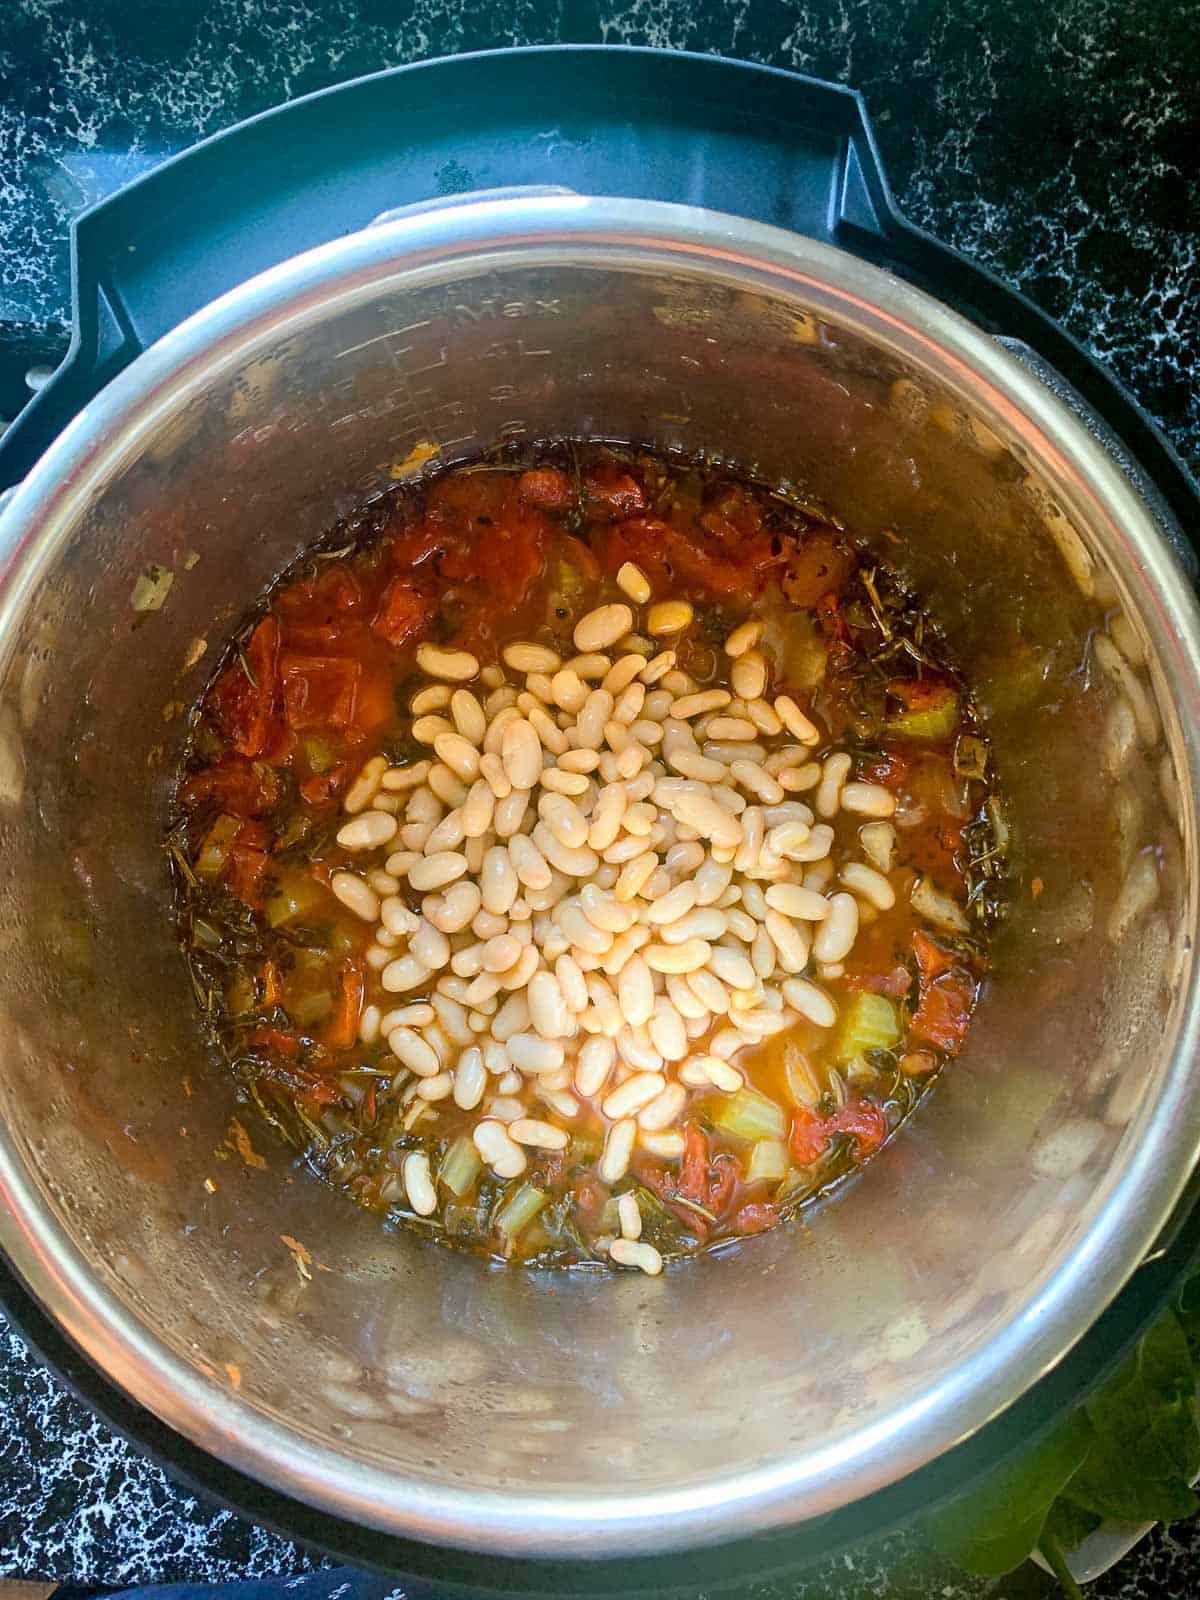 Preparing Minestrone Soup step 3, adding beans.